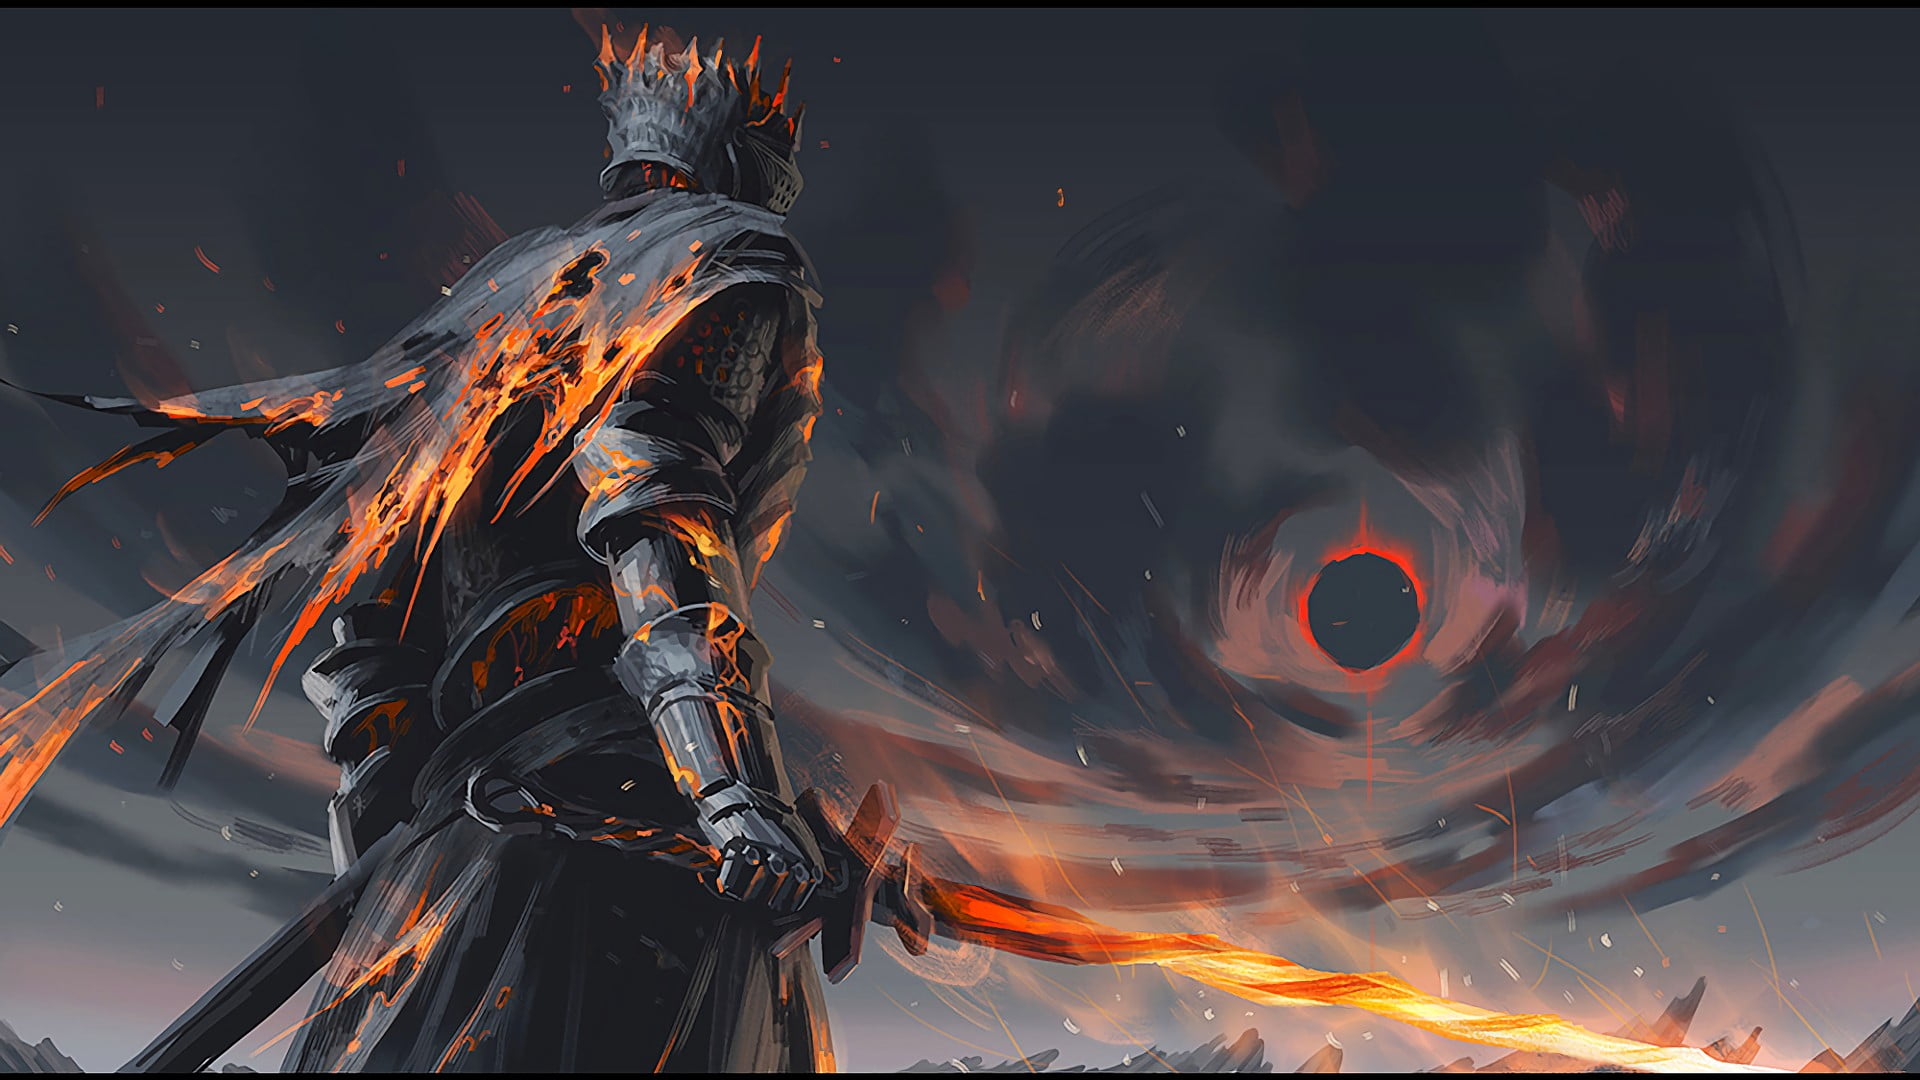 warrior holding sword wallpaper, video game screenshot, fantasy art